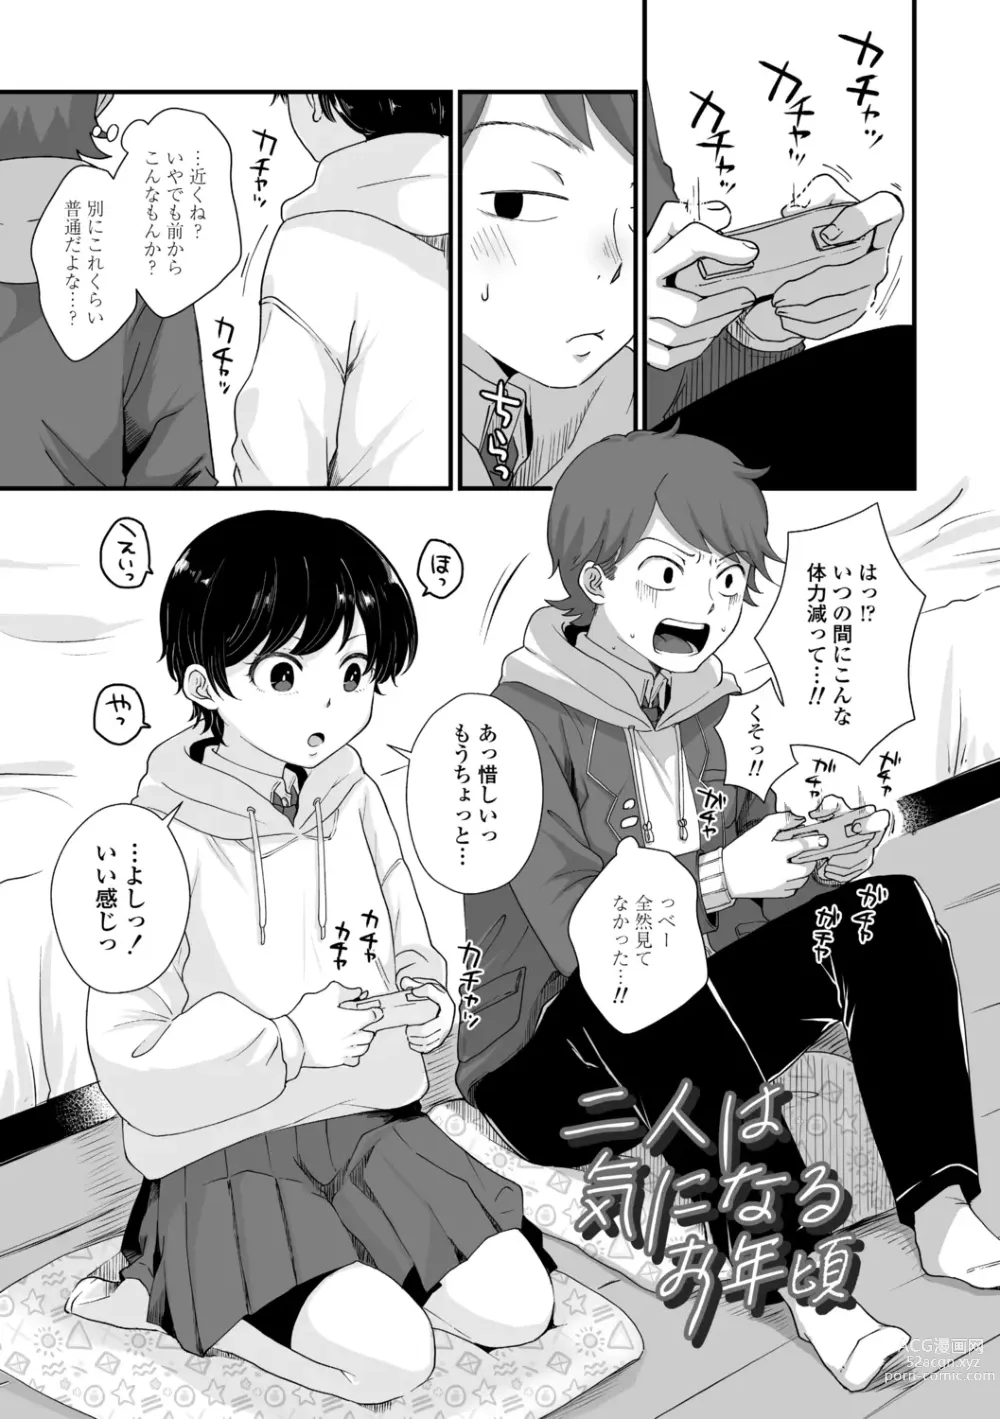 Page 5 of manga Futari Play